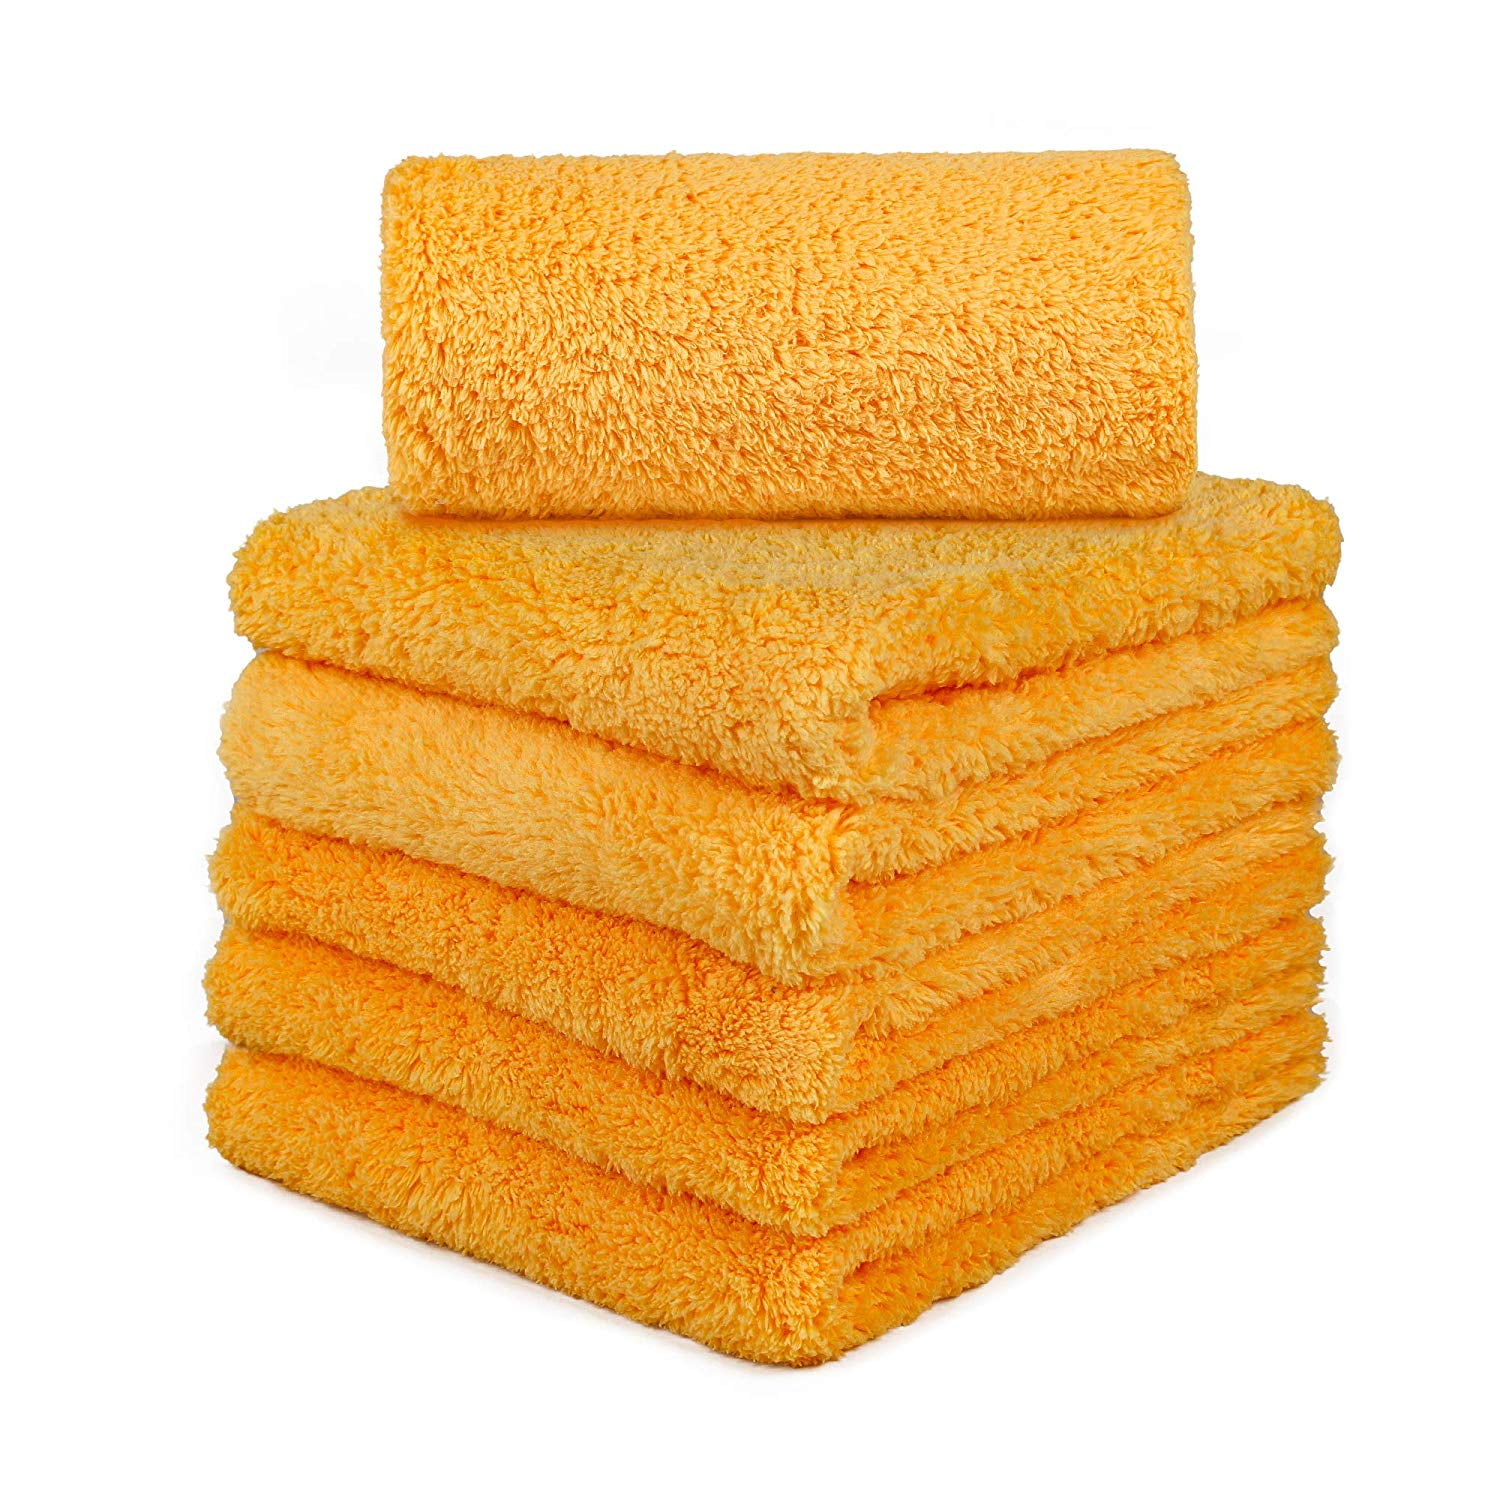 Bulk Edgeless microfiber towels cleaning towel plush 16x16" 380 gsm lint free 